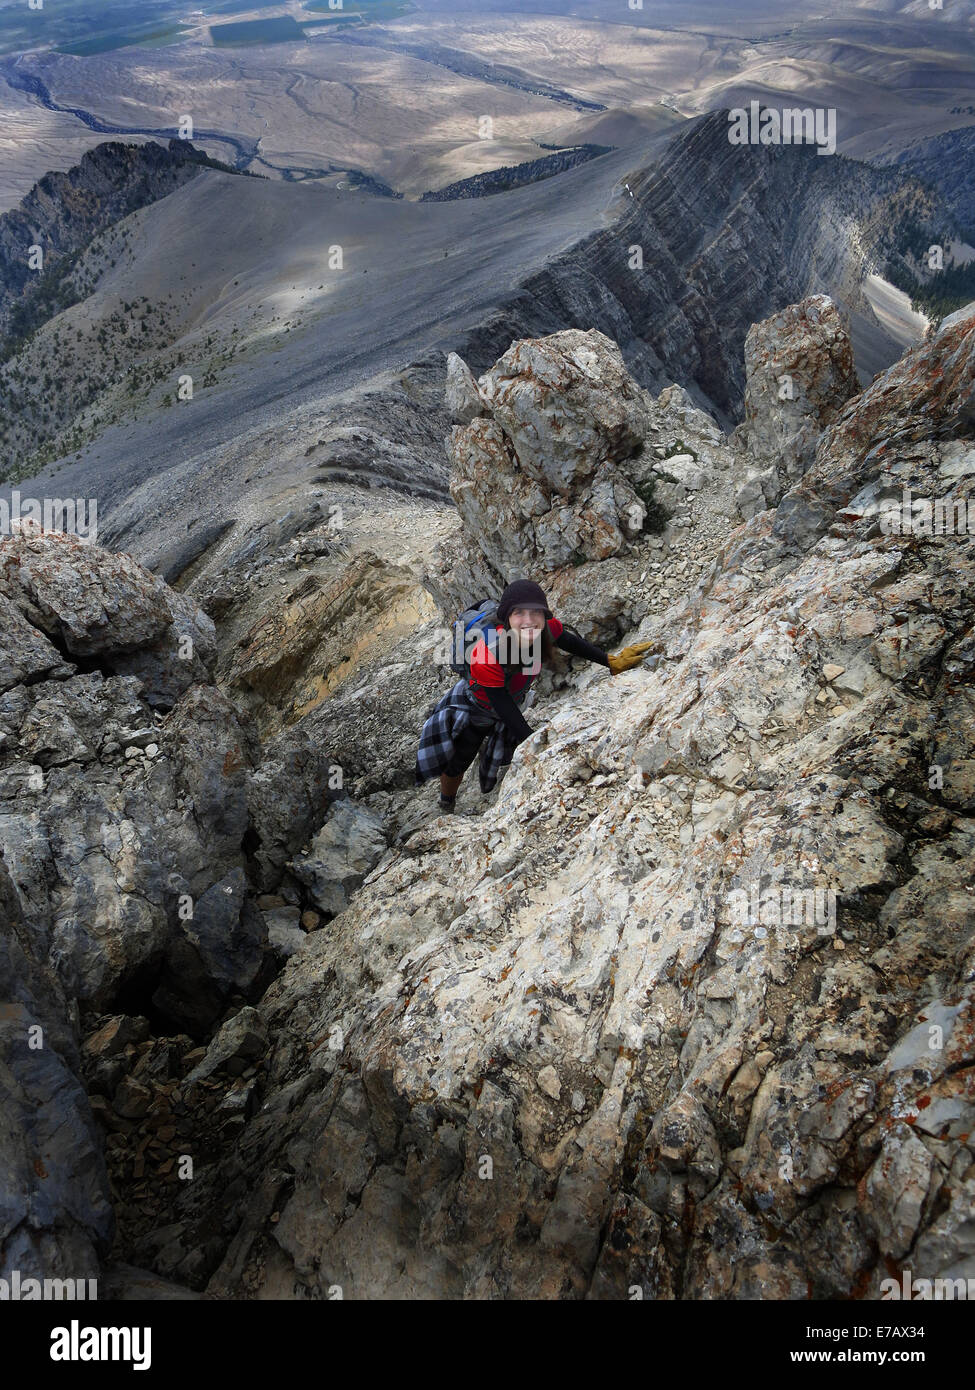 Girl hiker summit mountain top in triumph Stock Photo